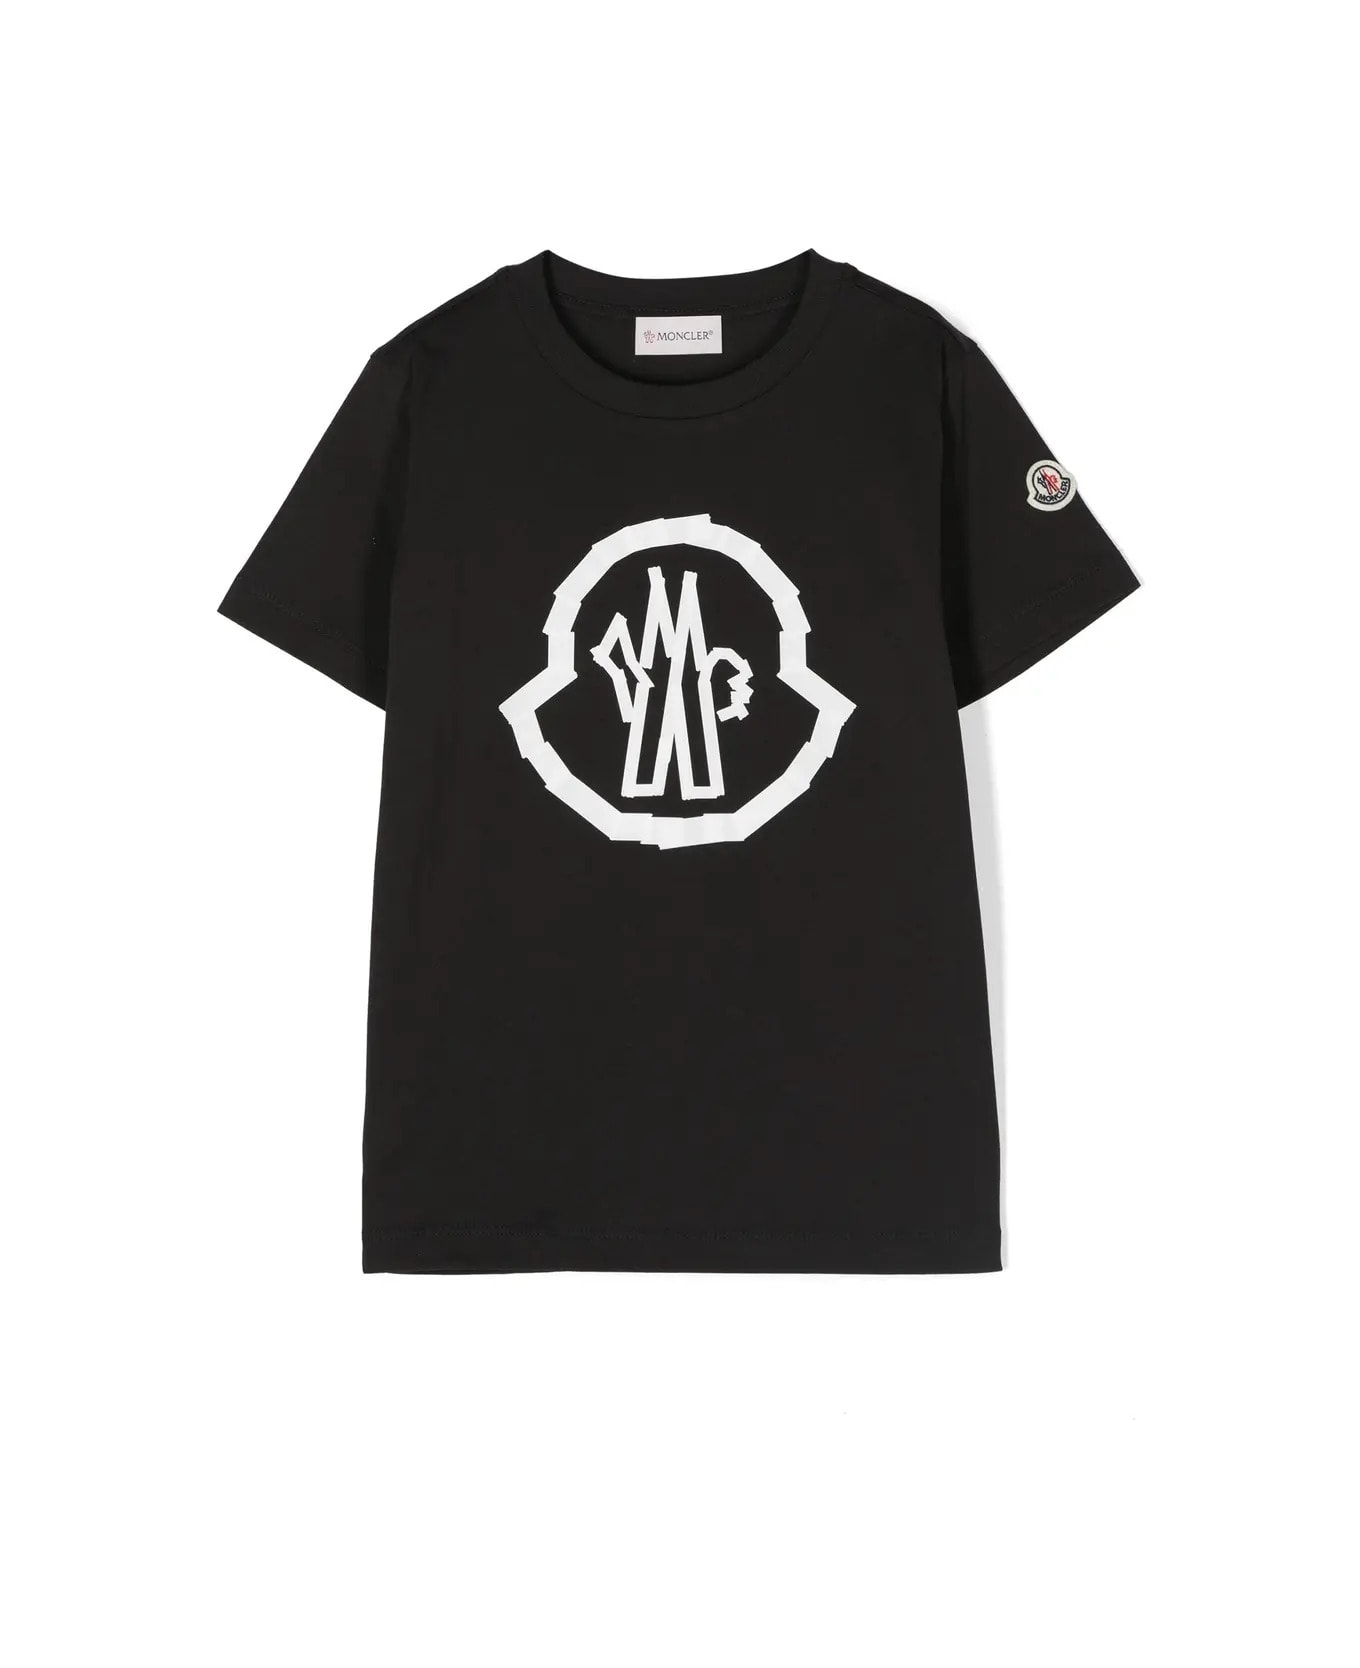 Moncler Black Logoed T-shirt - Black